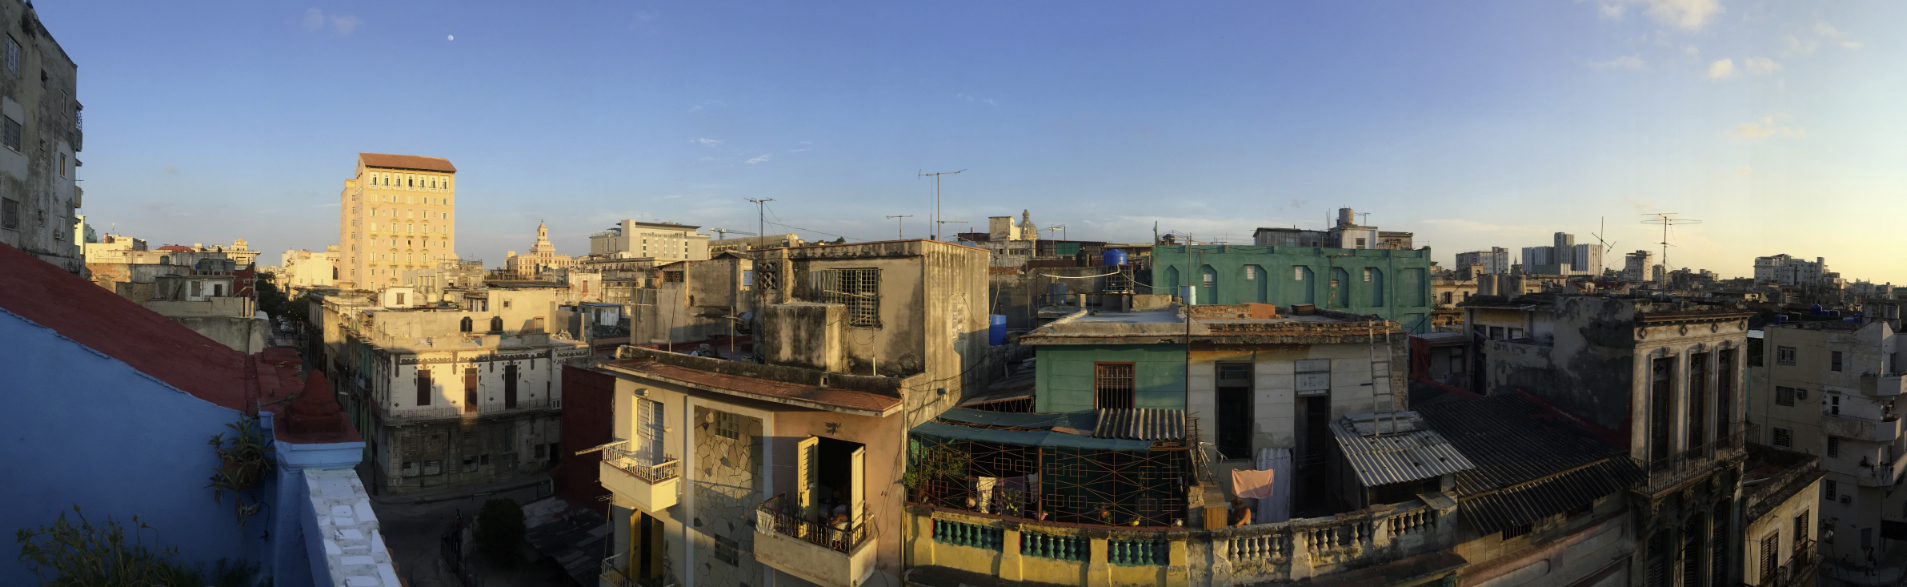 Habana Centro_Where Excuses Go to Die1